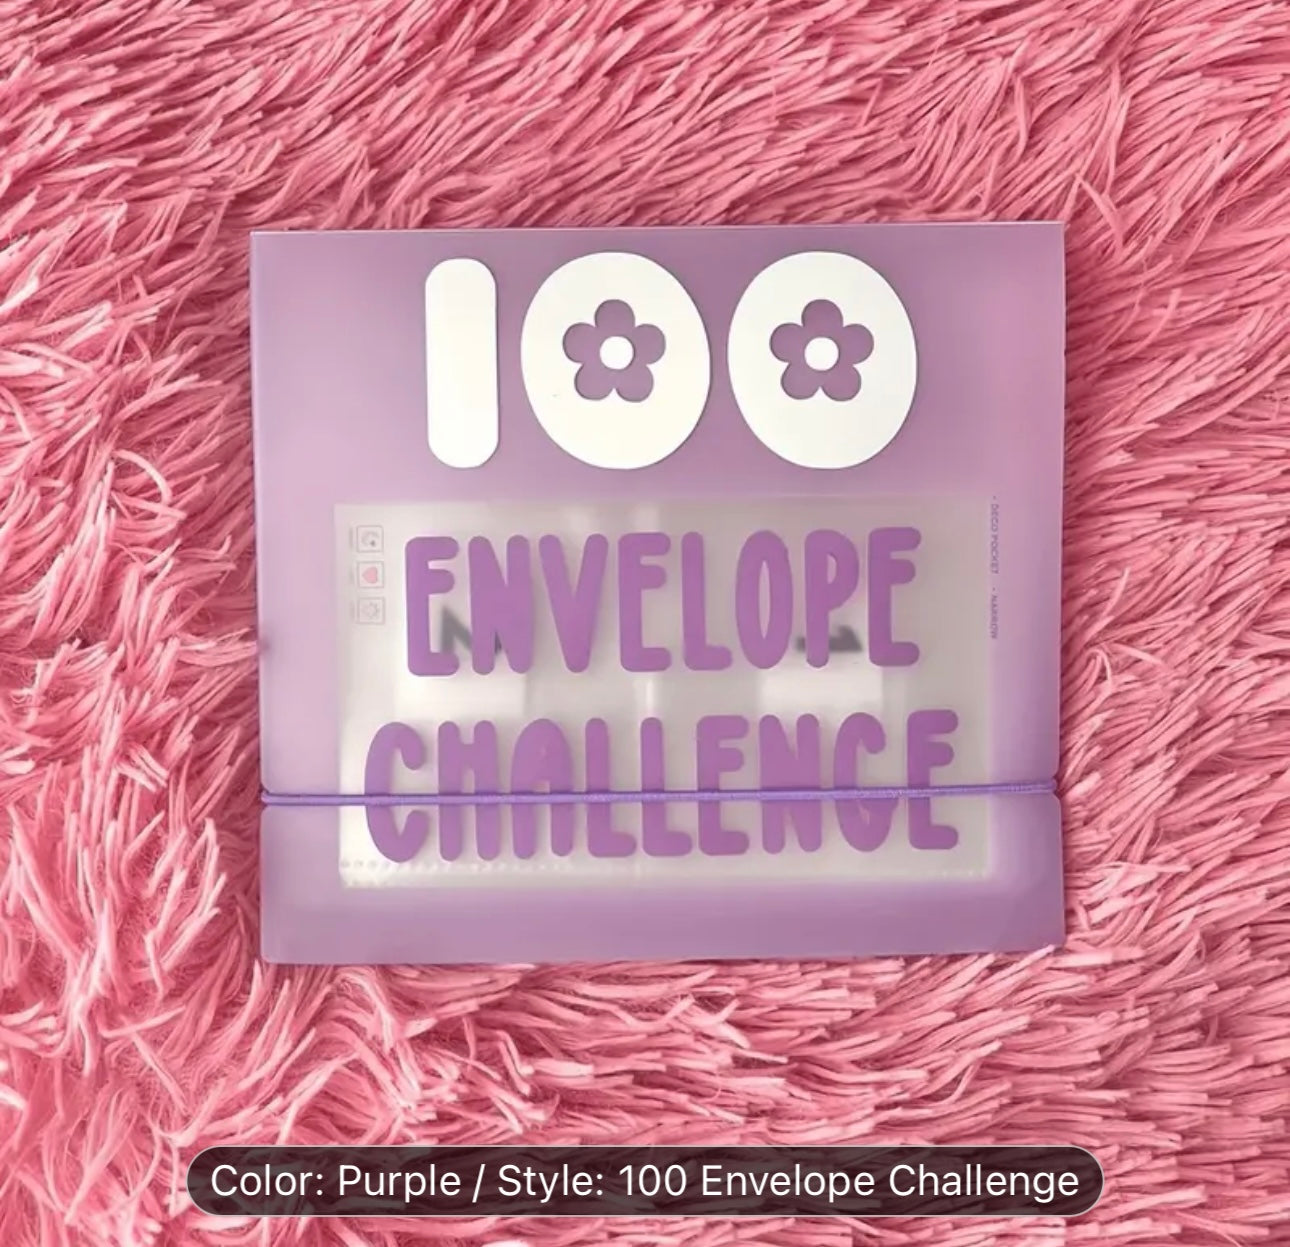 Envelope challenge